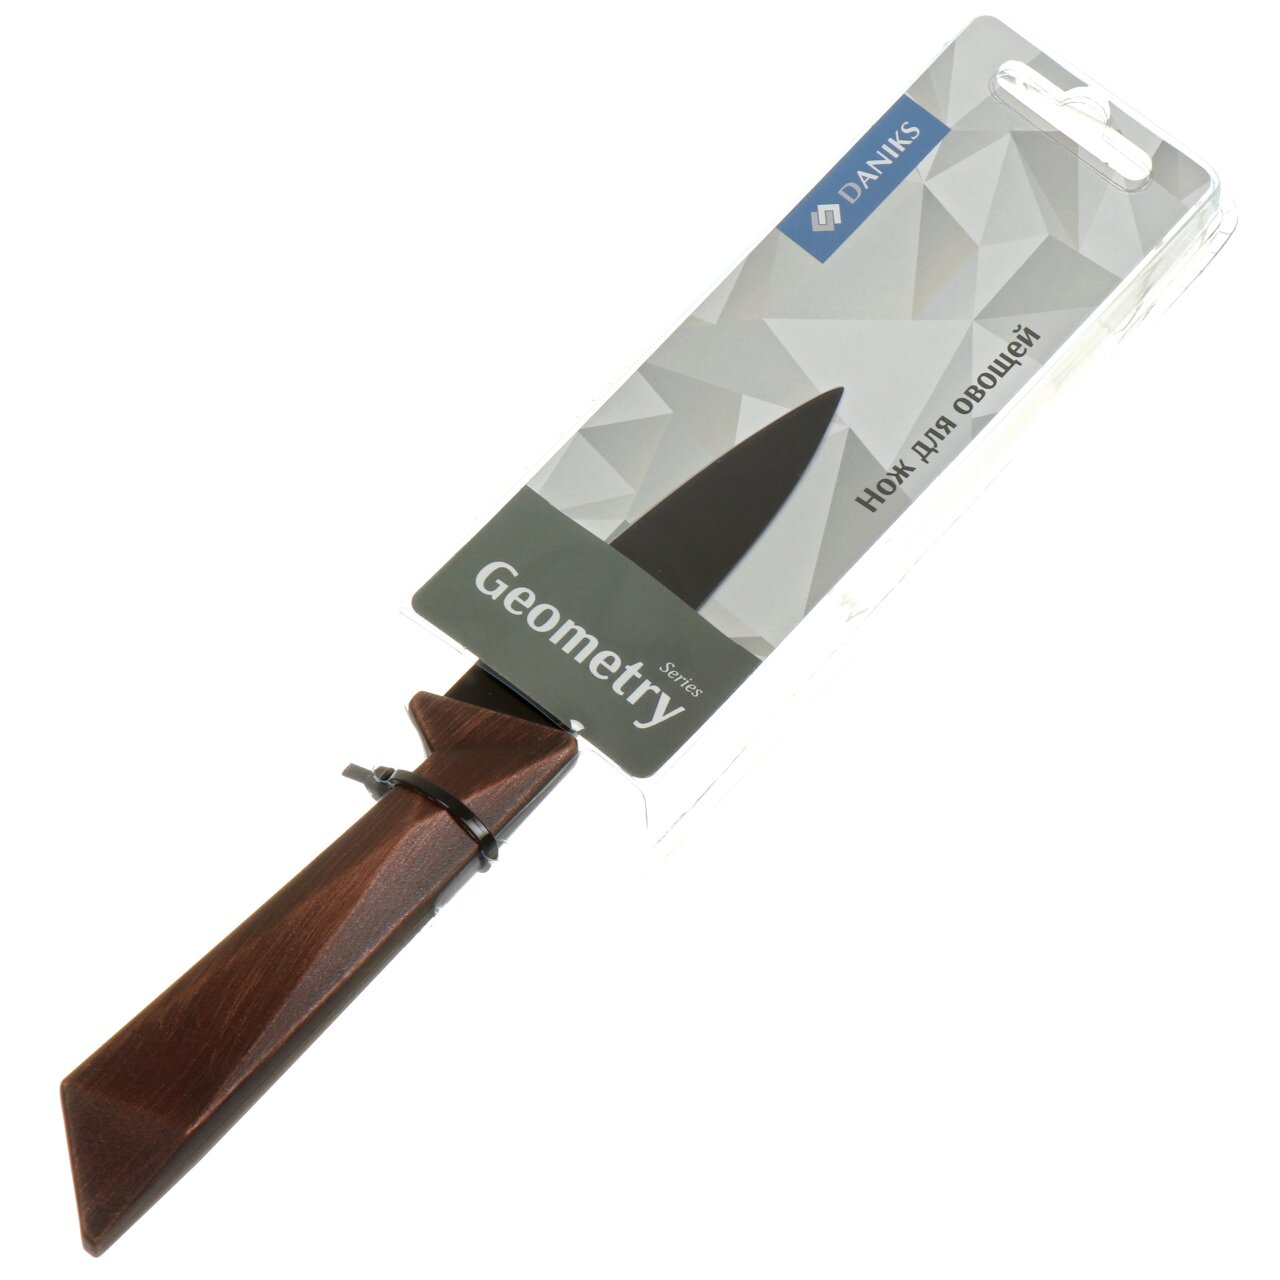 Нож кухонный Daniks, Геометрия, для овощей, нержавеющая сталь, 9 см, рукоятка пластик, JA20200944-5 разно ная геометрия